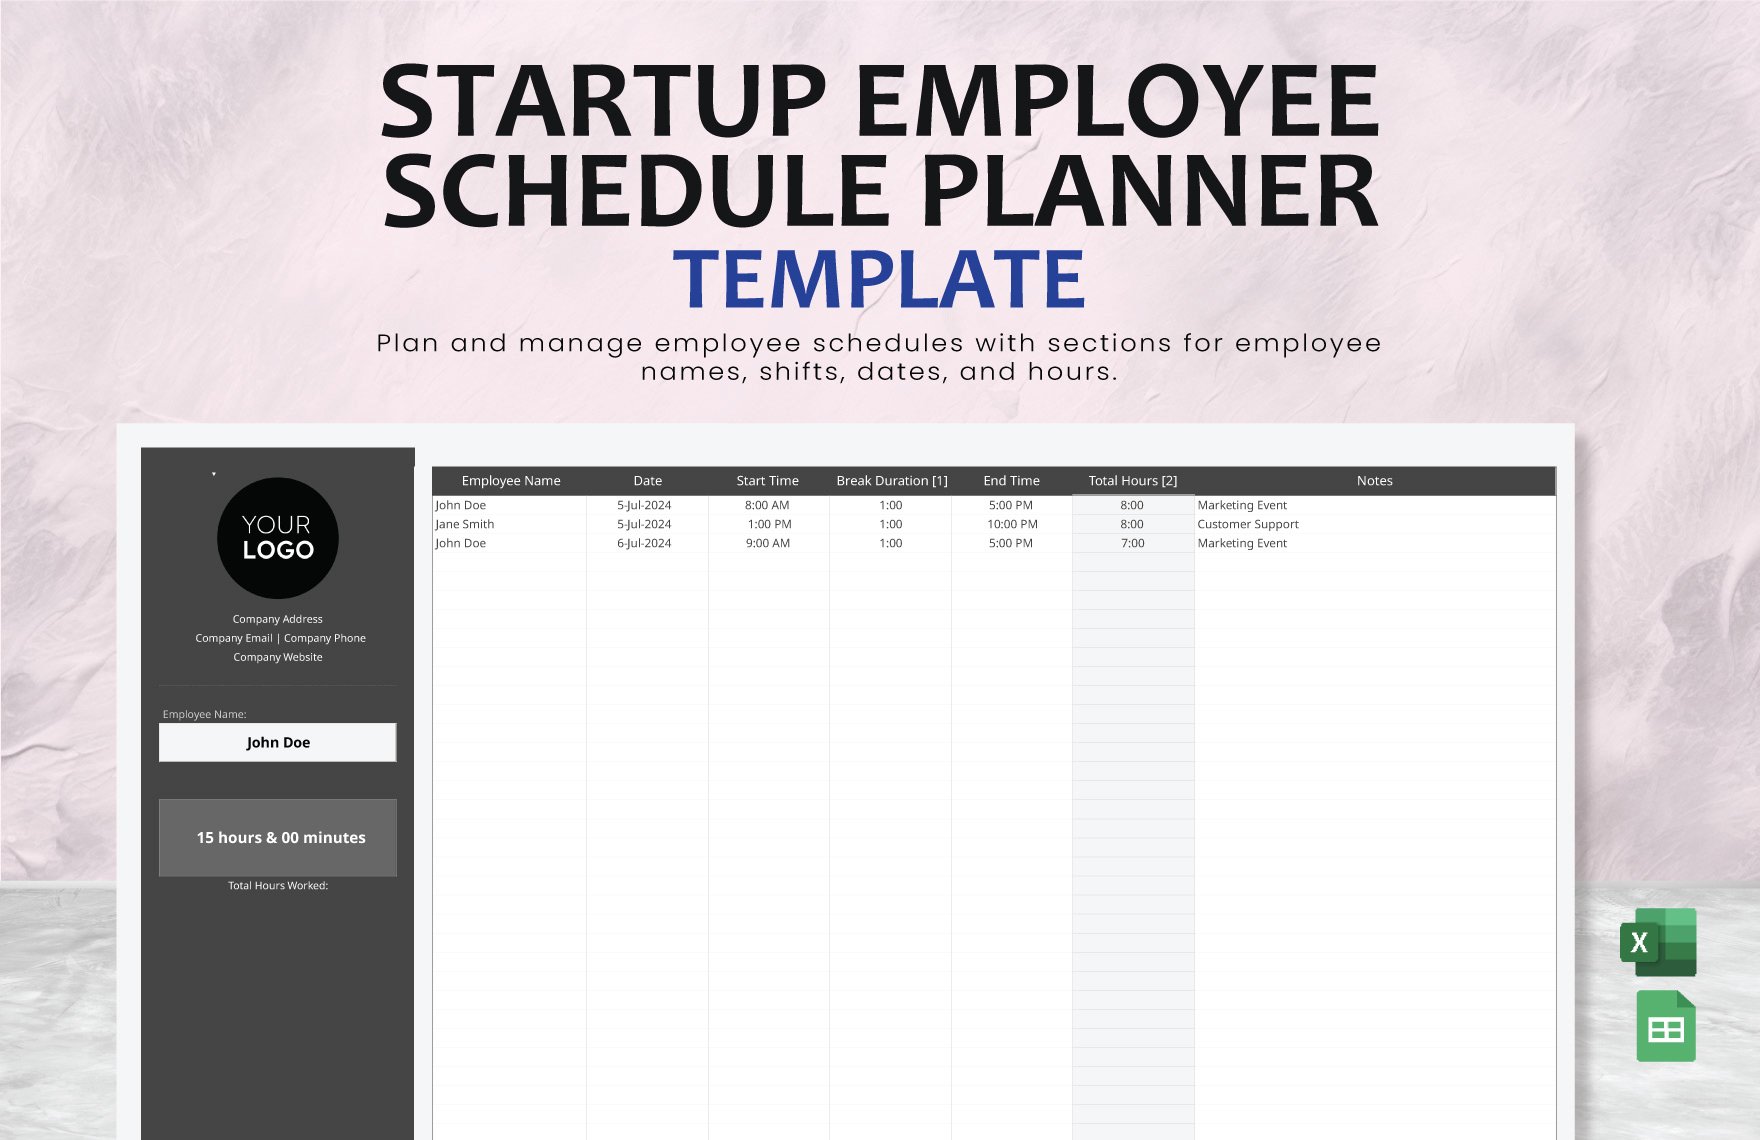 Startup Employee Schedule Planner Template in Excel, Google Sheets